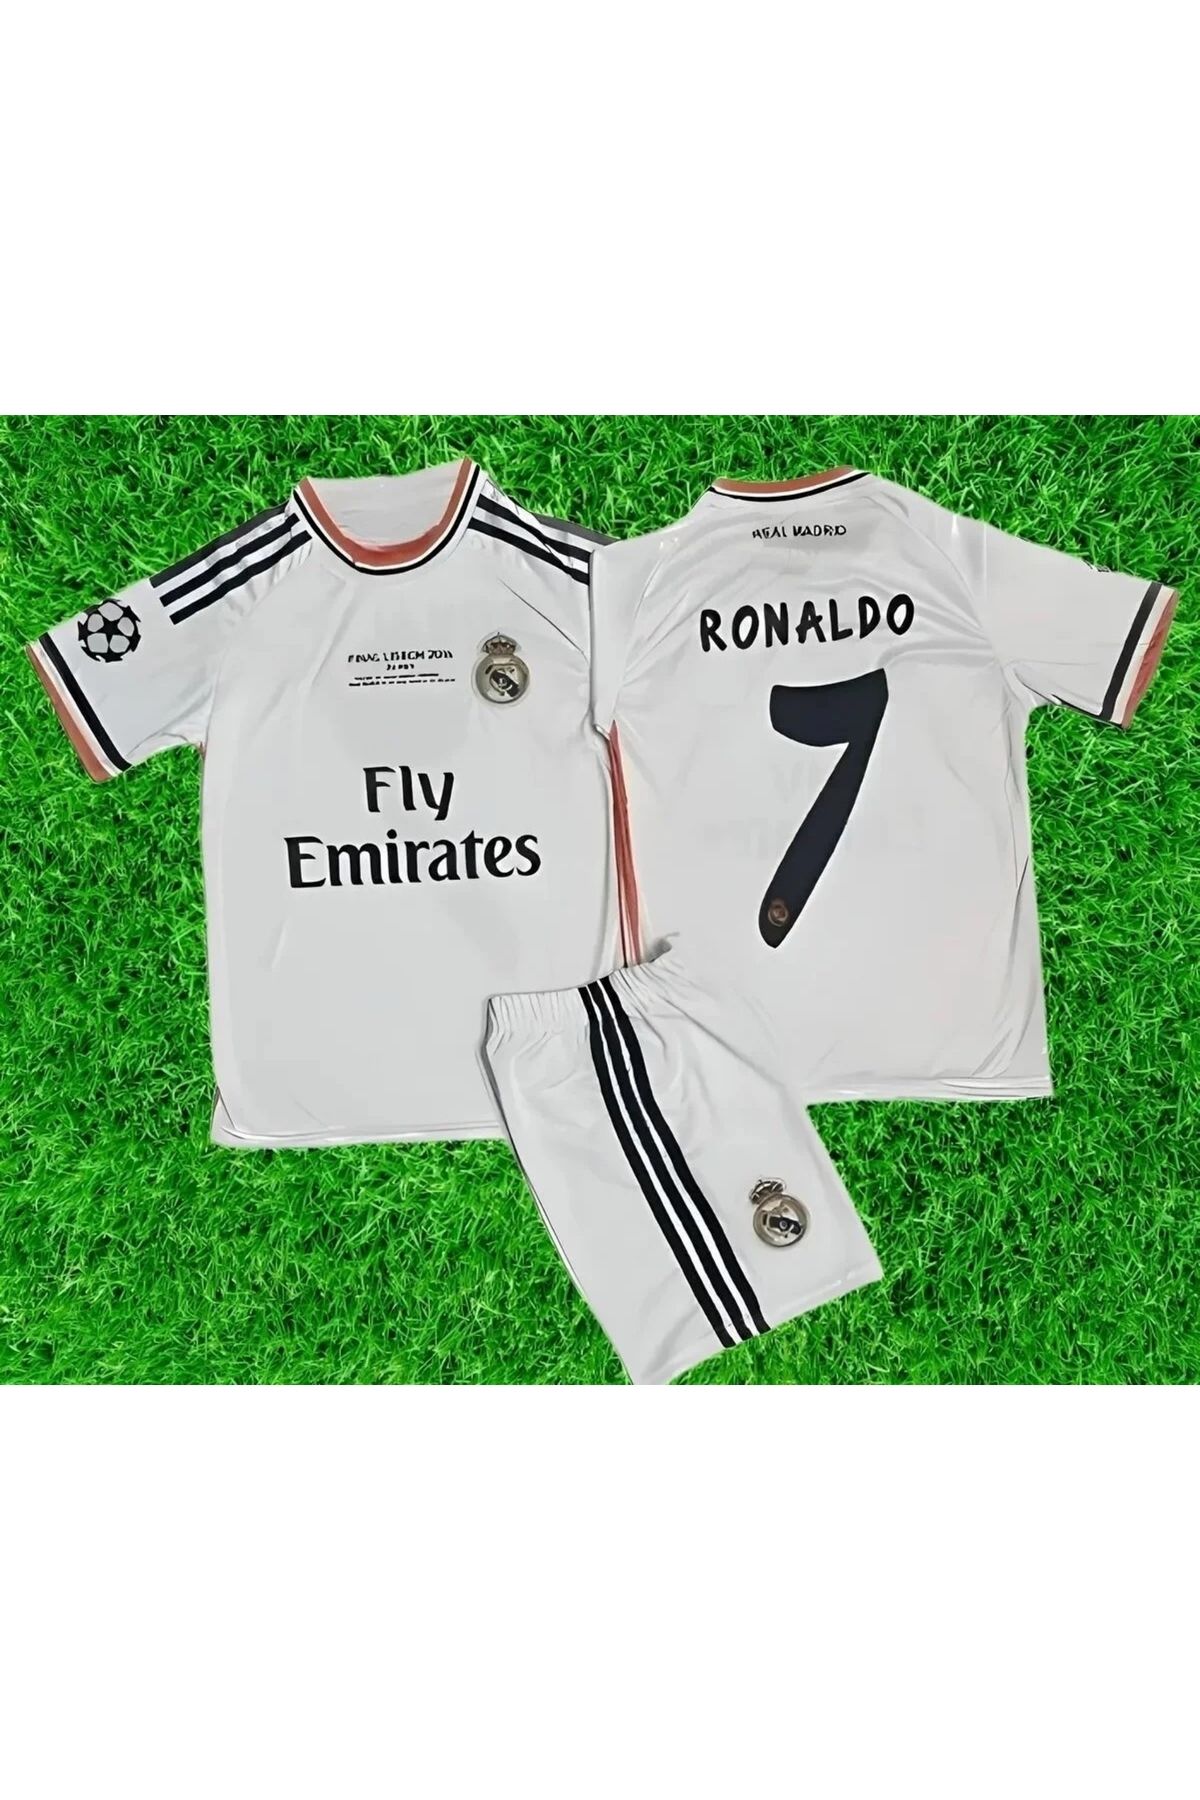 yenteks Real Madrid Efsane 2014 Lisbon 07 Ronaldo 4 Lü Set Çocuk Forması Finali Ylç123